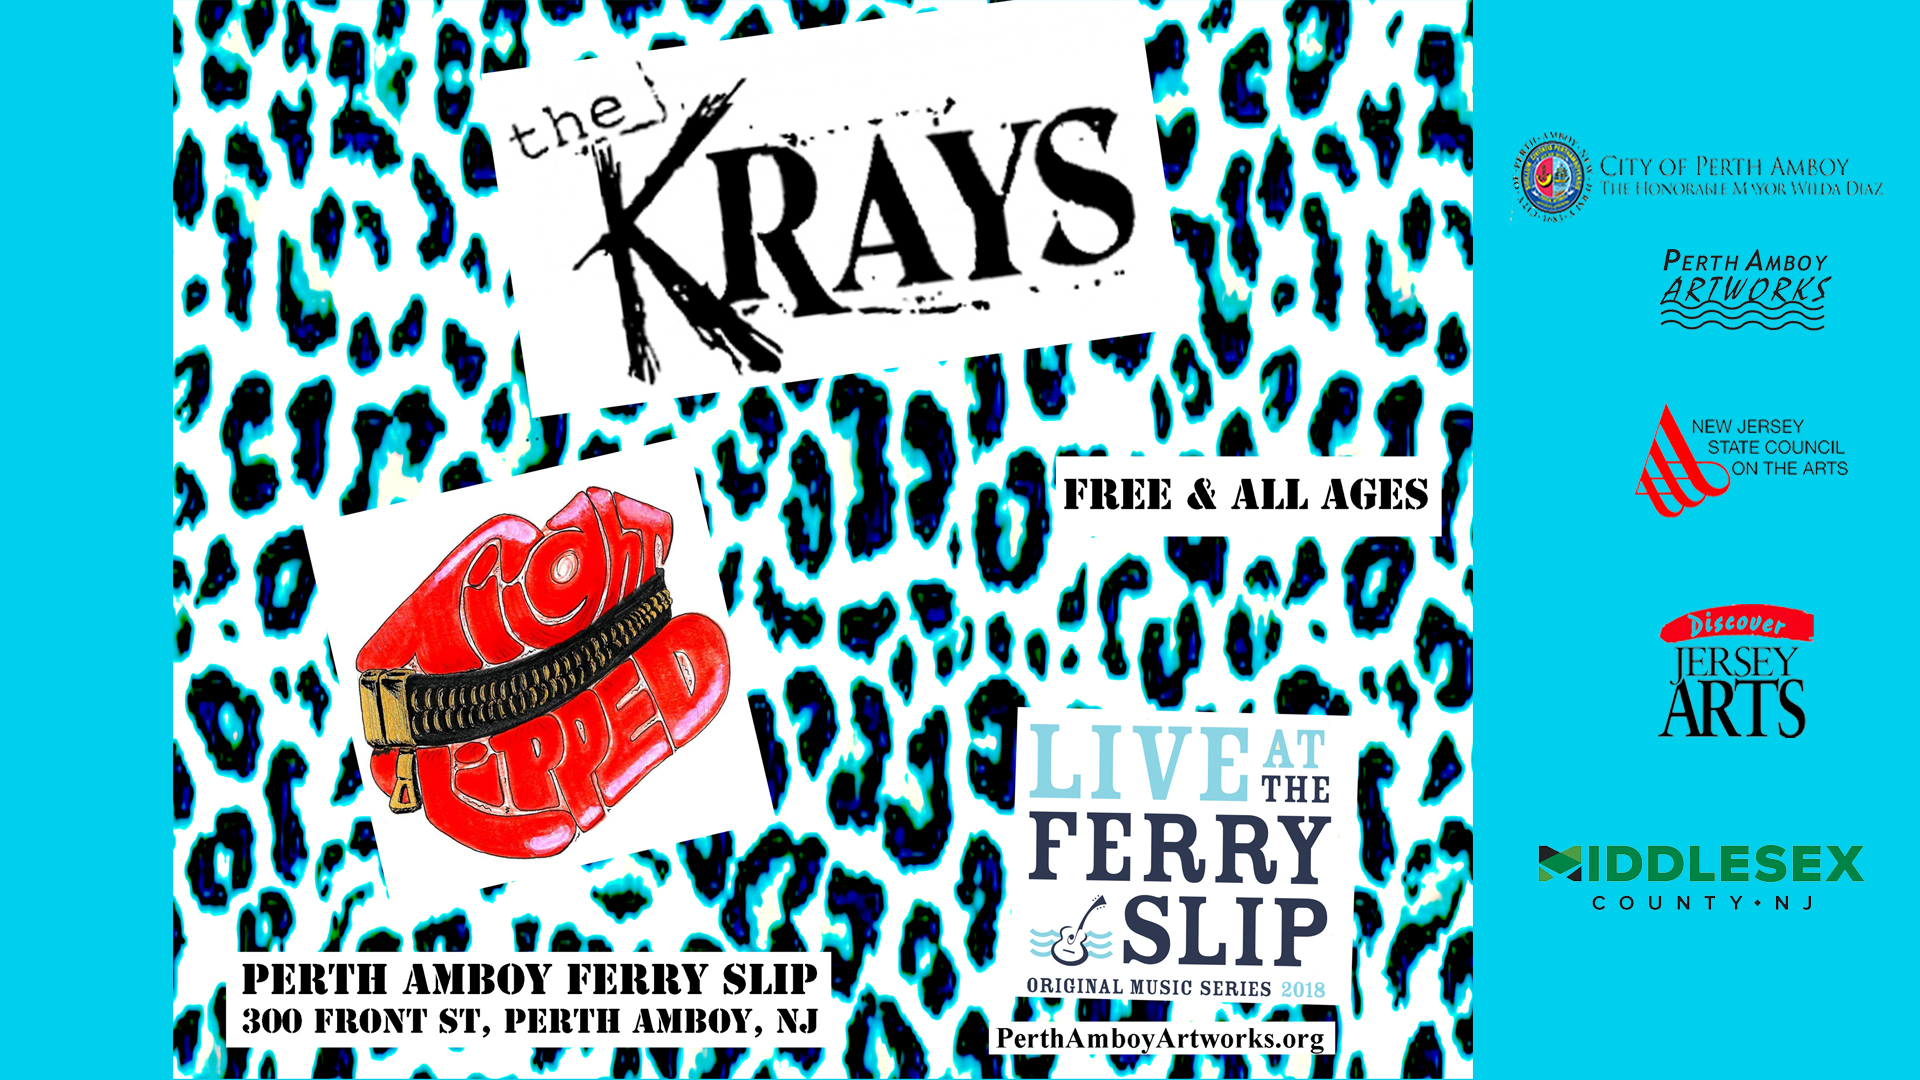 Punk Rock Night Live at the Ferry Slip Perth Amboy Artworks The Krays